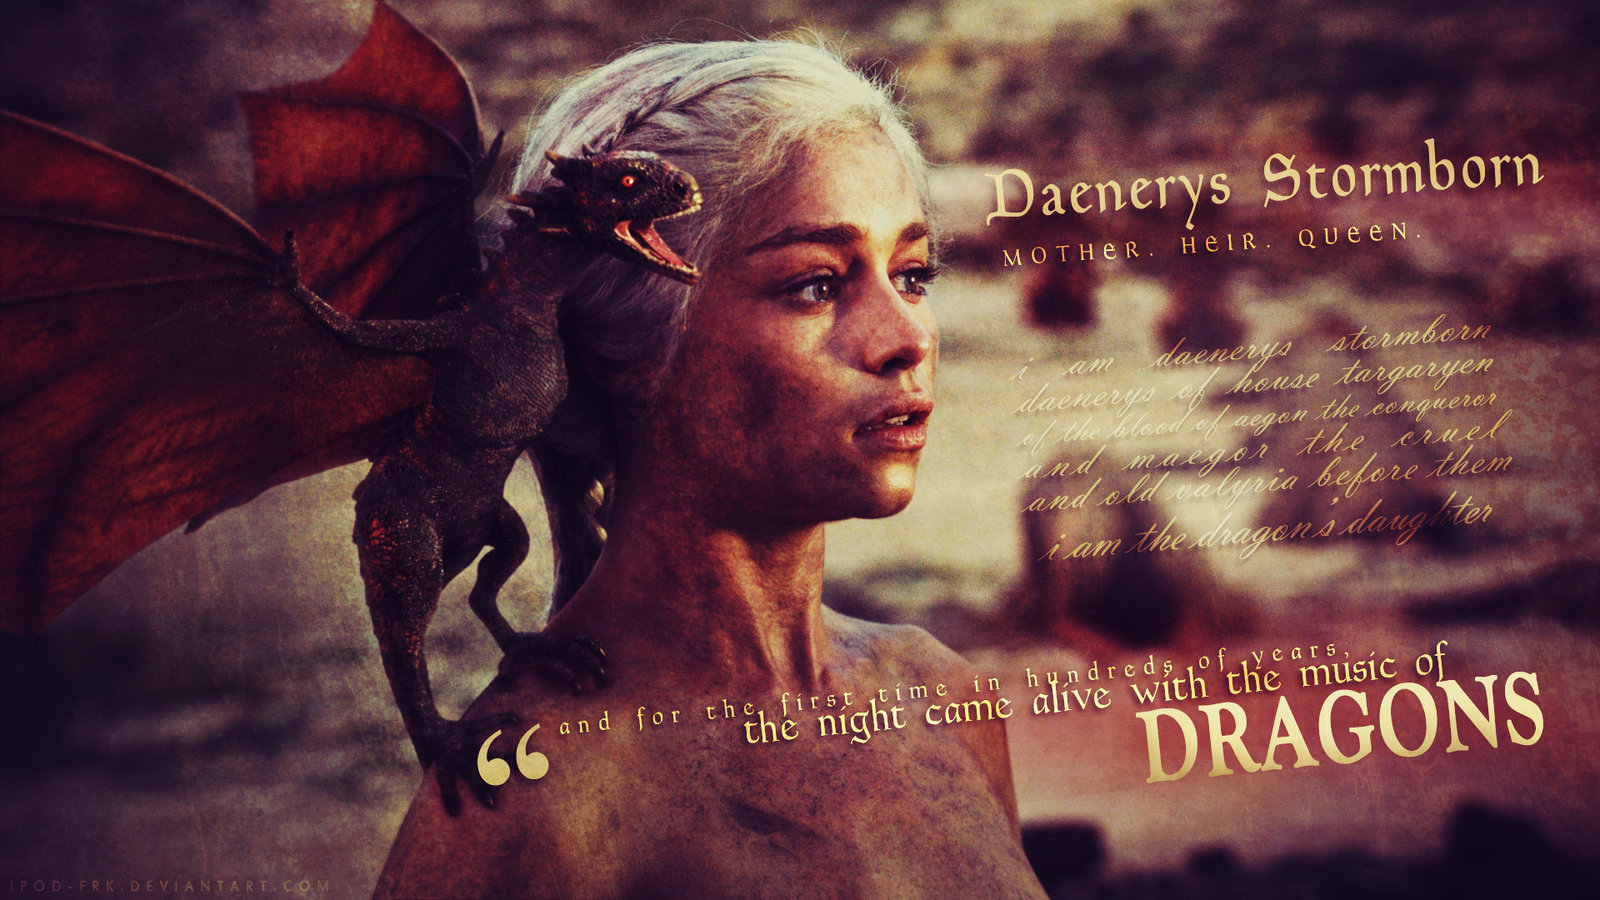 Game Of Thrones, Daenerys Targaryen. Daenerys targaryen wallpaper, Daenerys targaryen, Game of throne daenerys